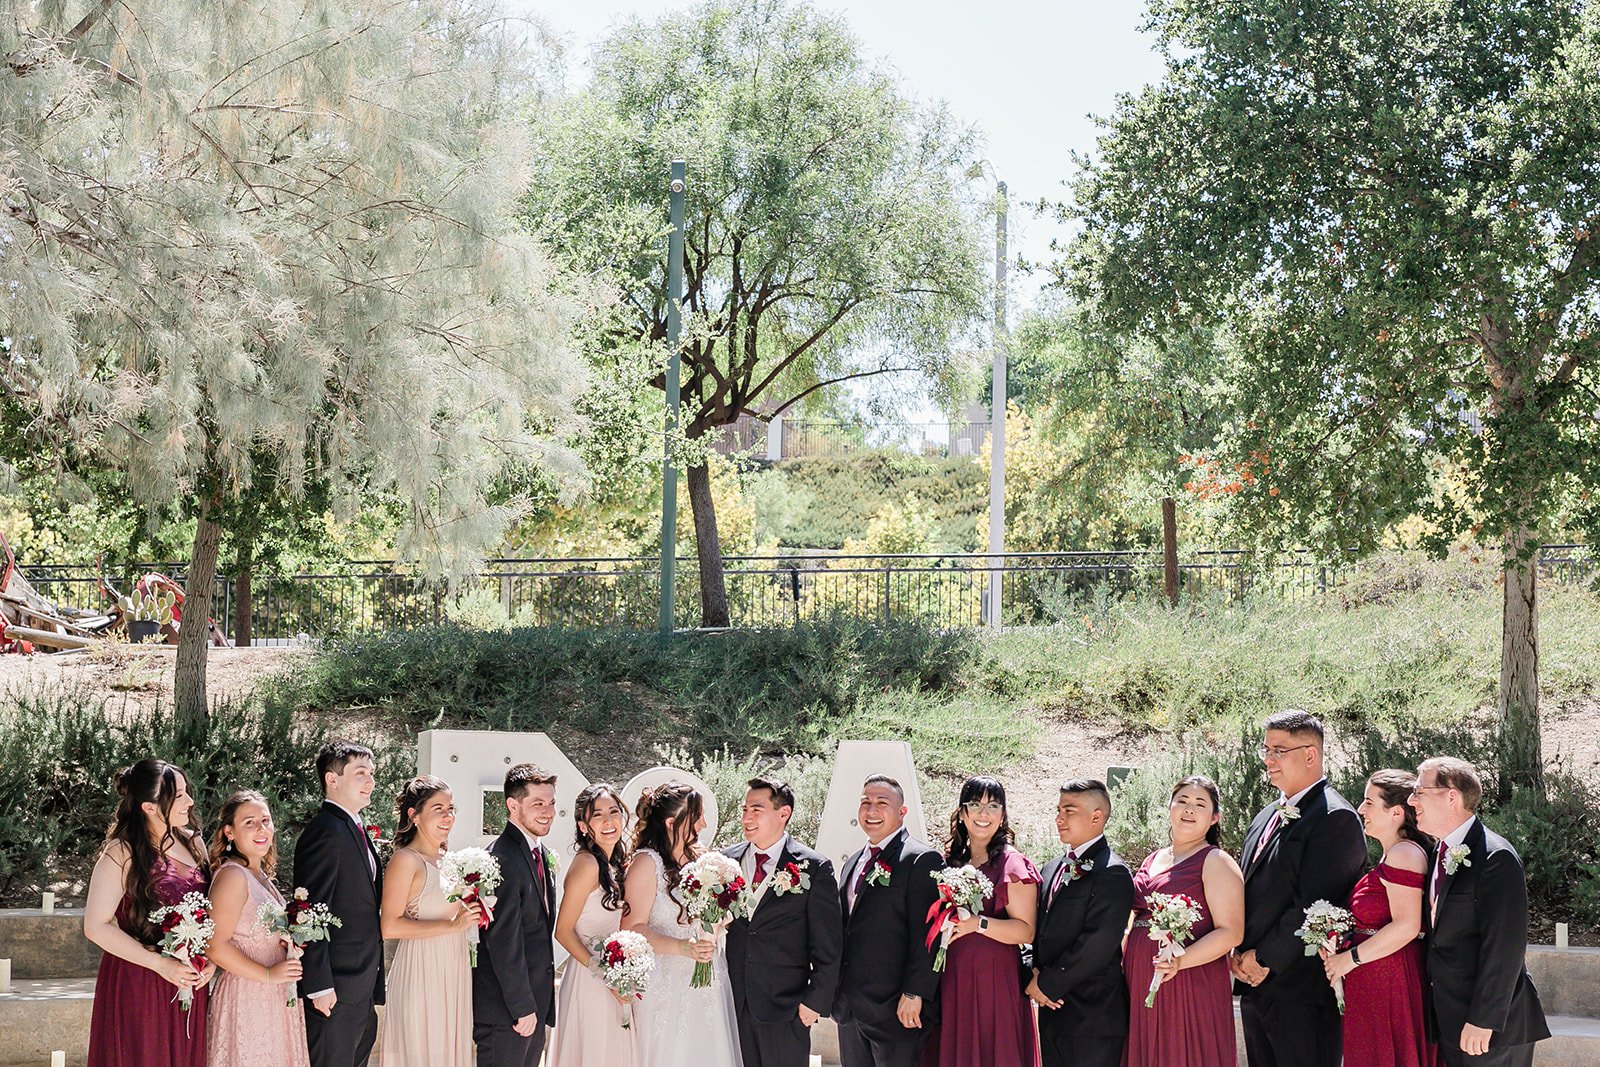 Wedding party portraits at Tesoro Adobe Historic Park in Santa Clarita